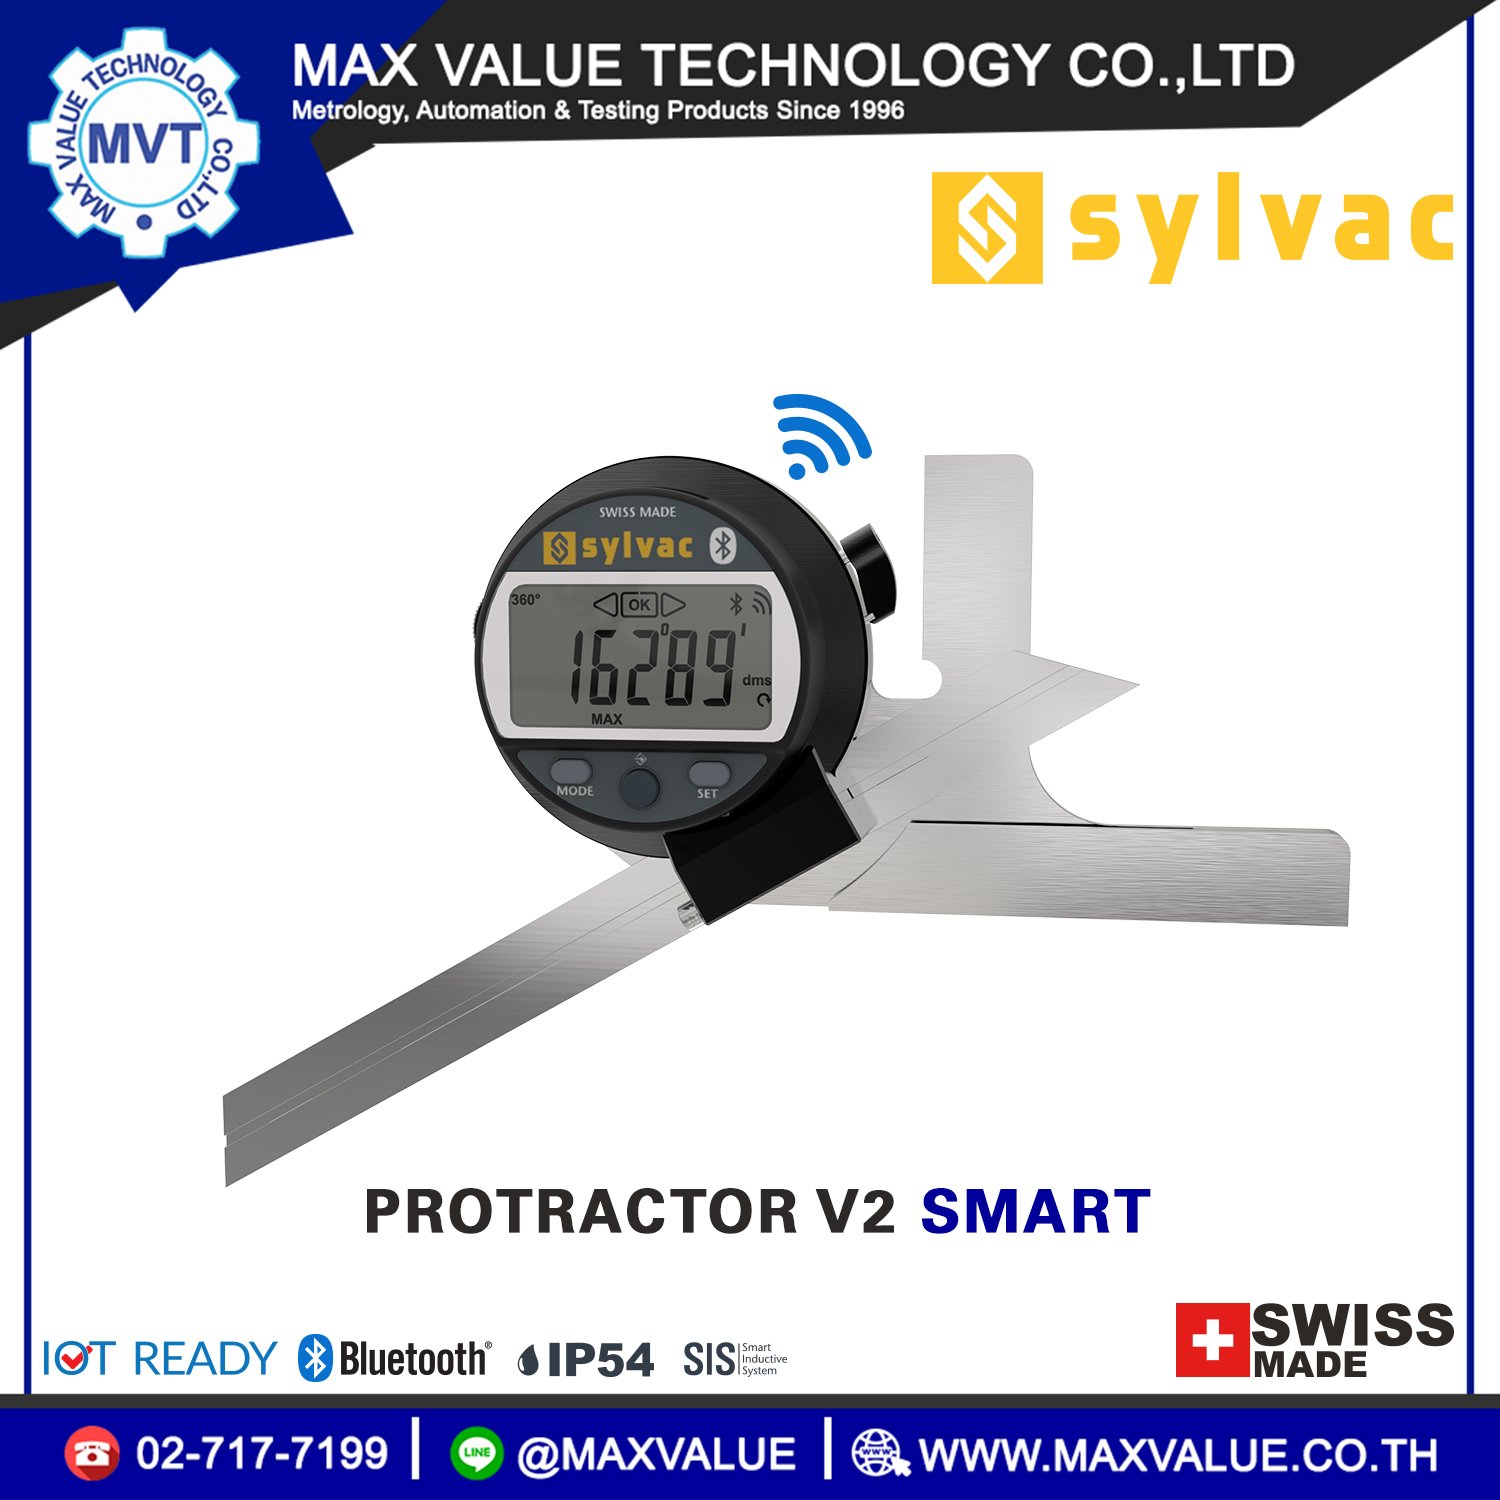 Protractor V2 Smart